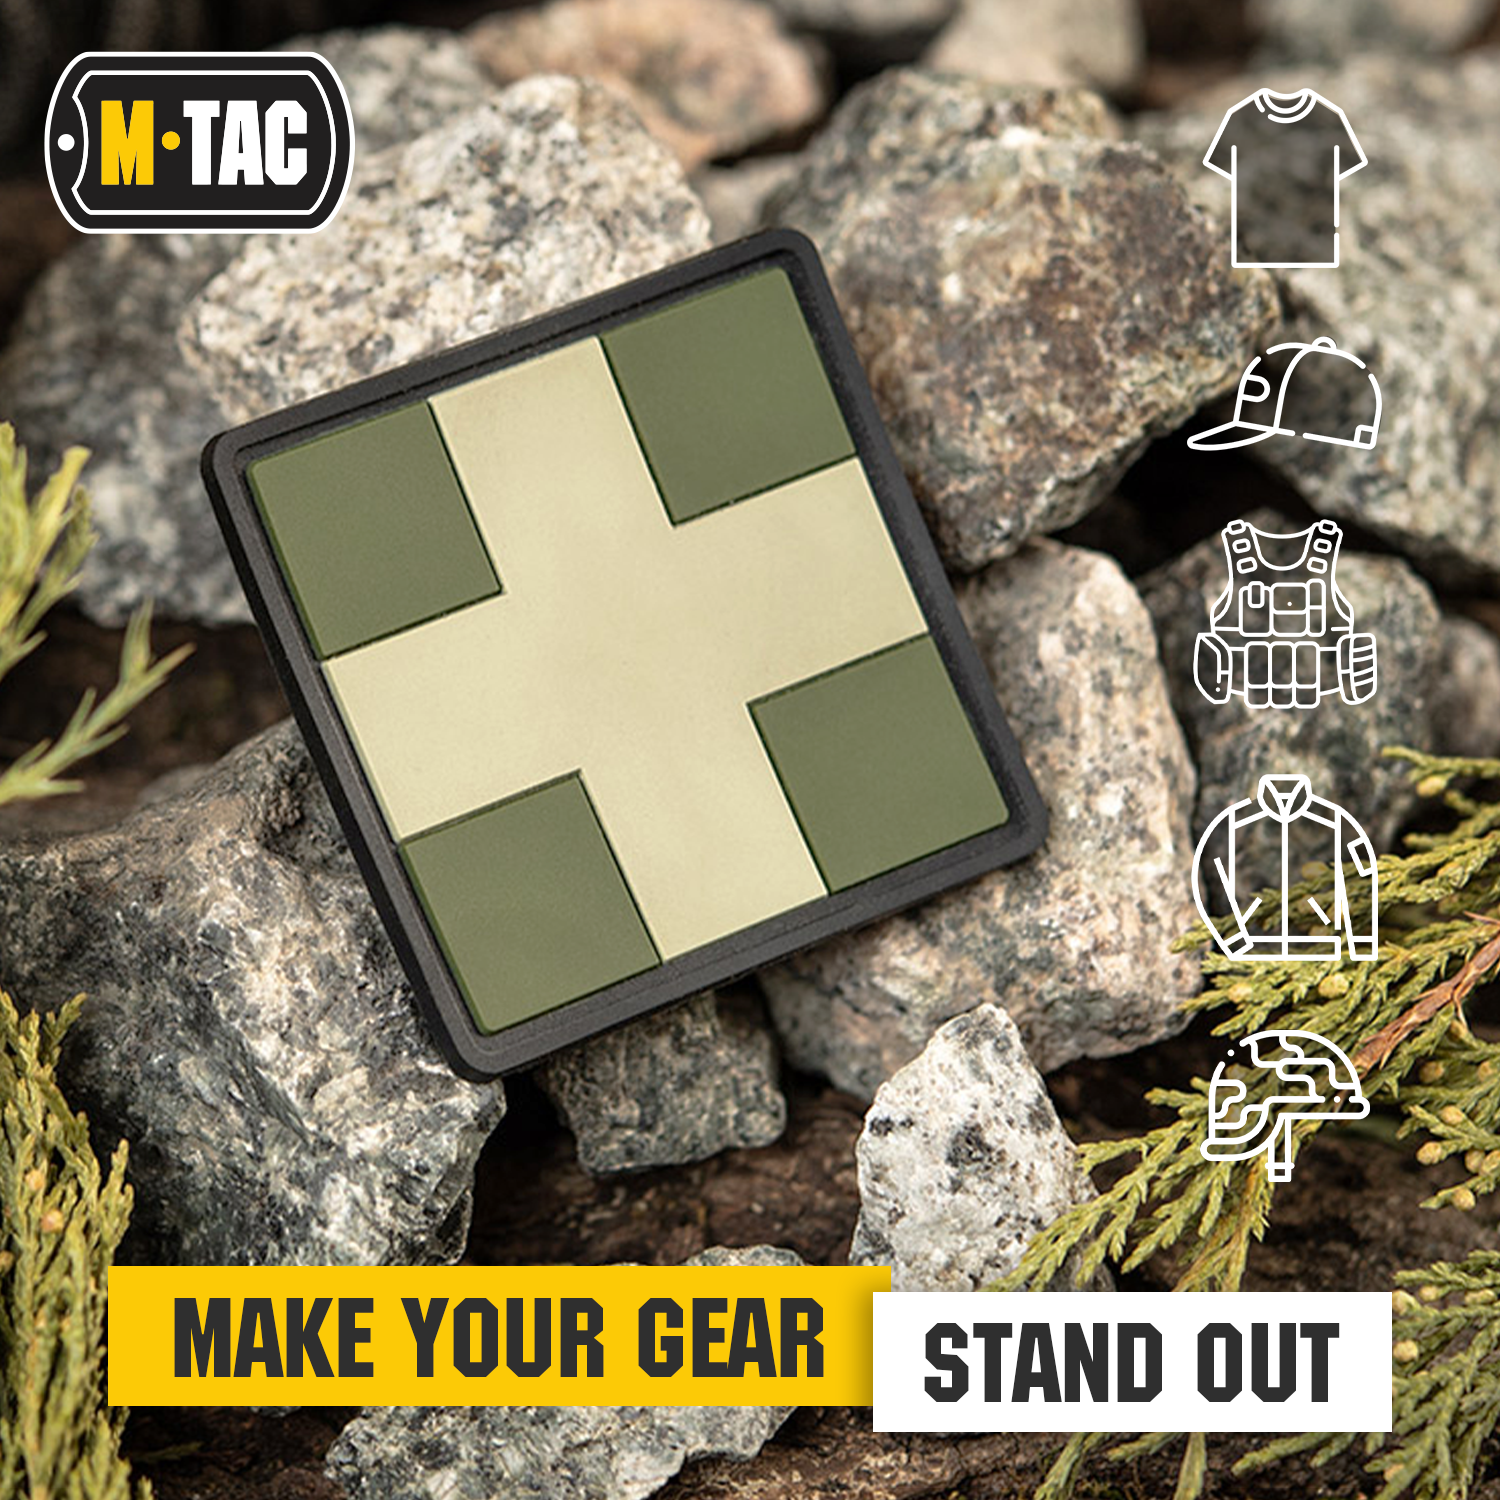 M-Tac patch Medic Cross Square PVC